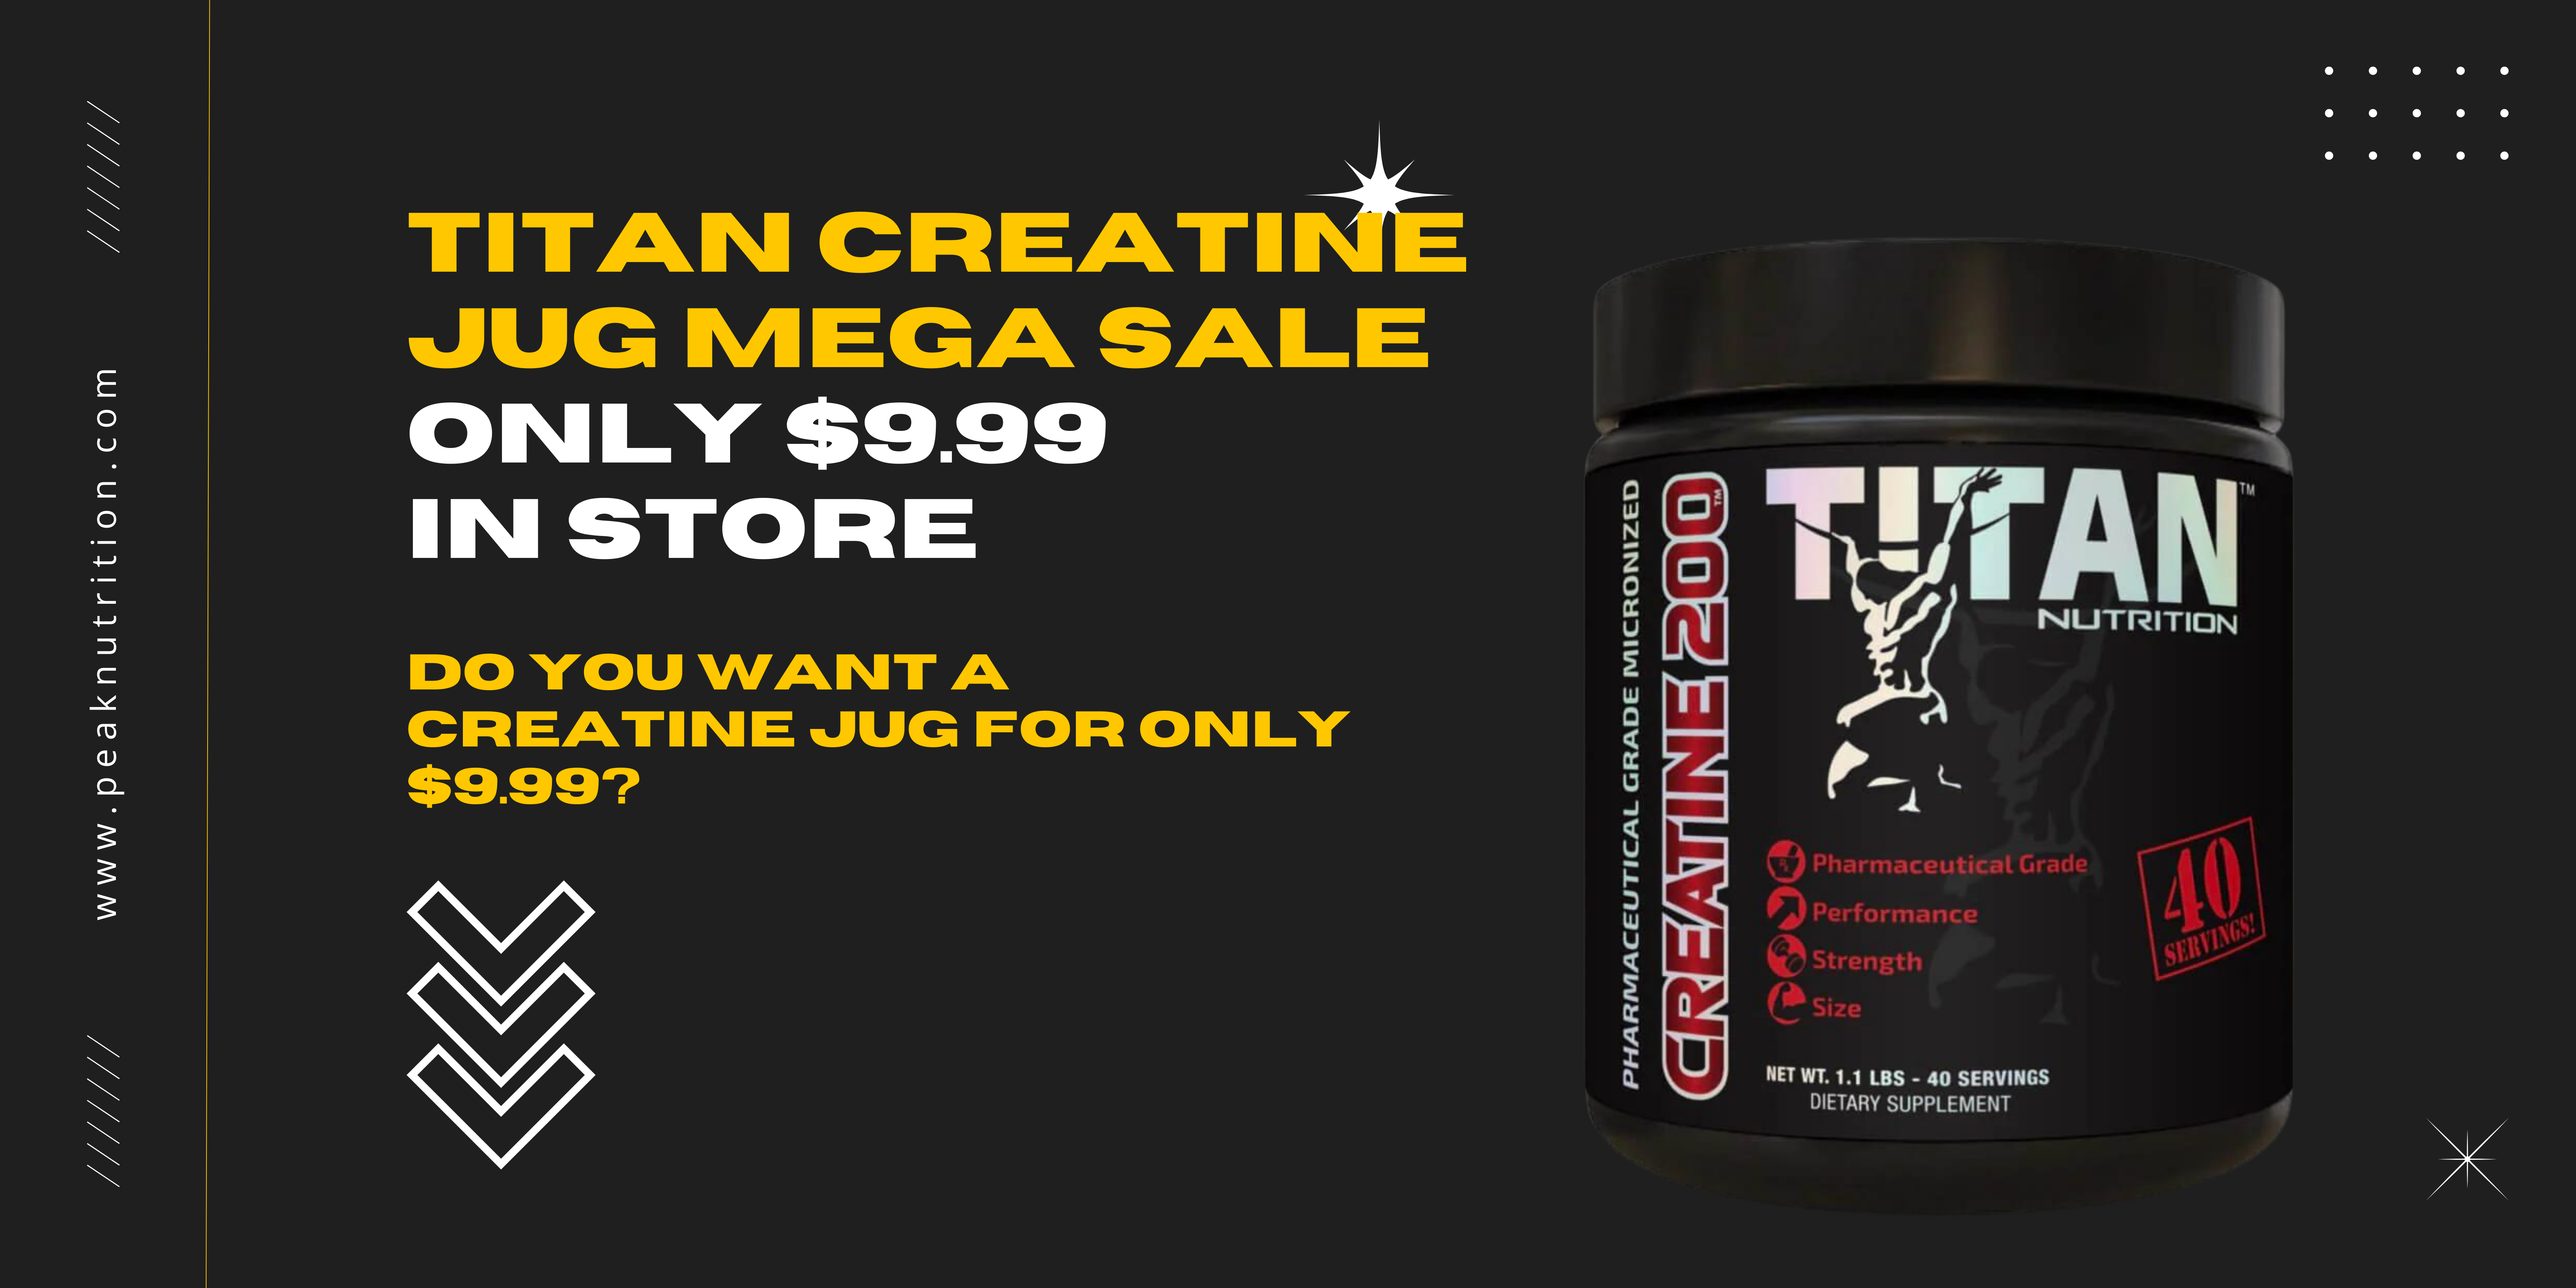 $9.99 jug of creatine titan nutrition 40 servings peak nutrition